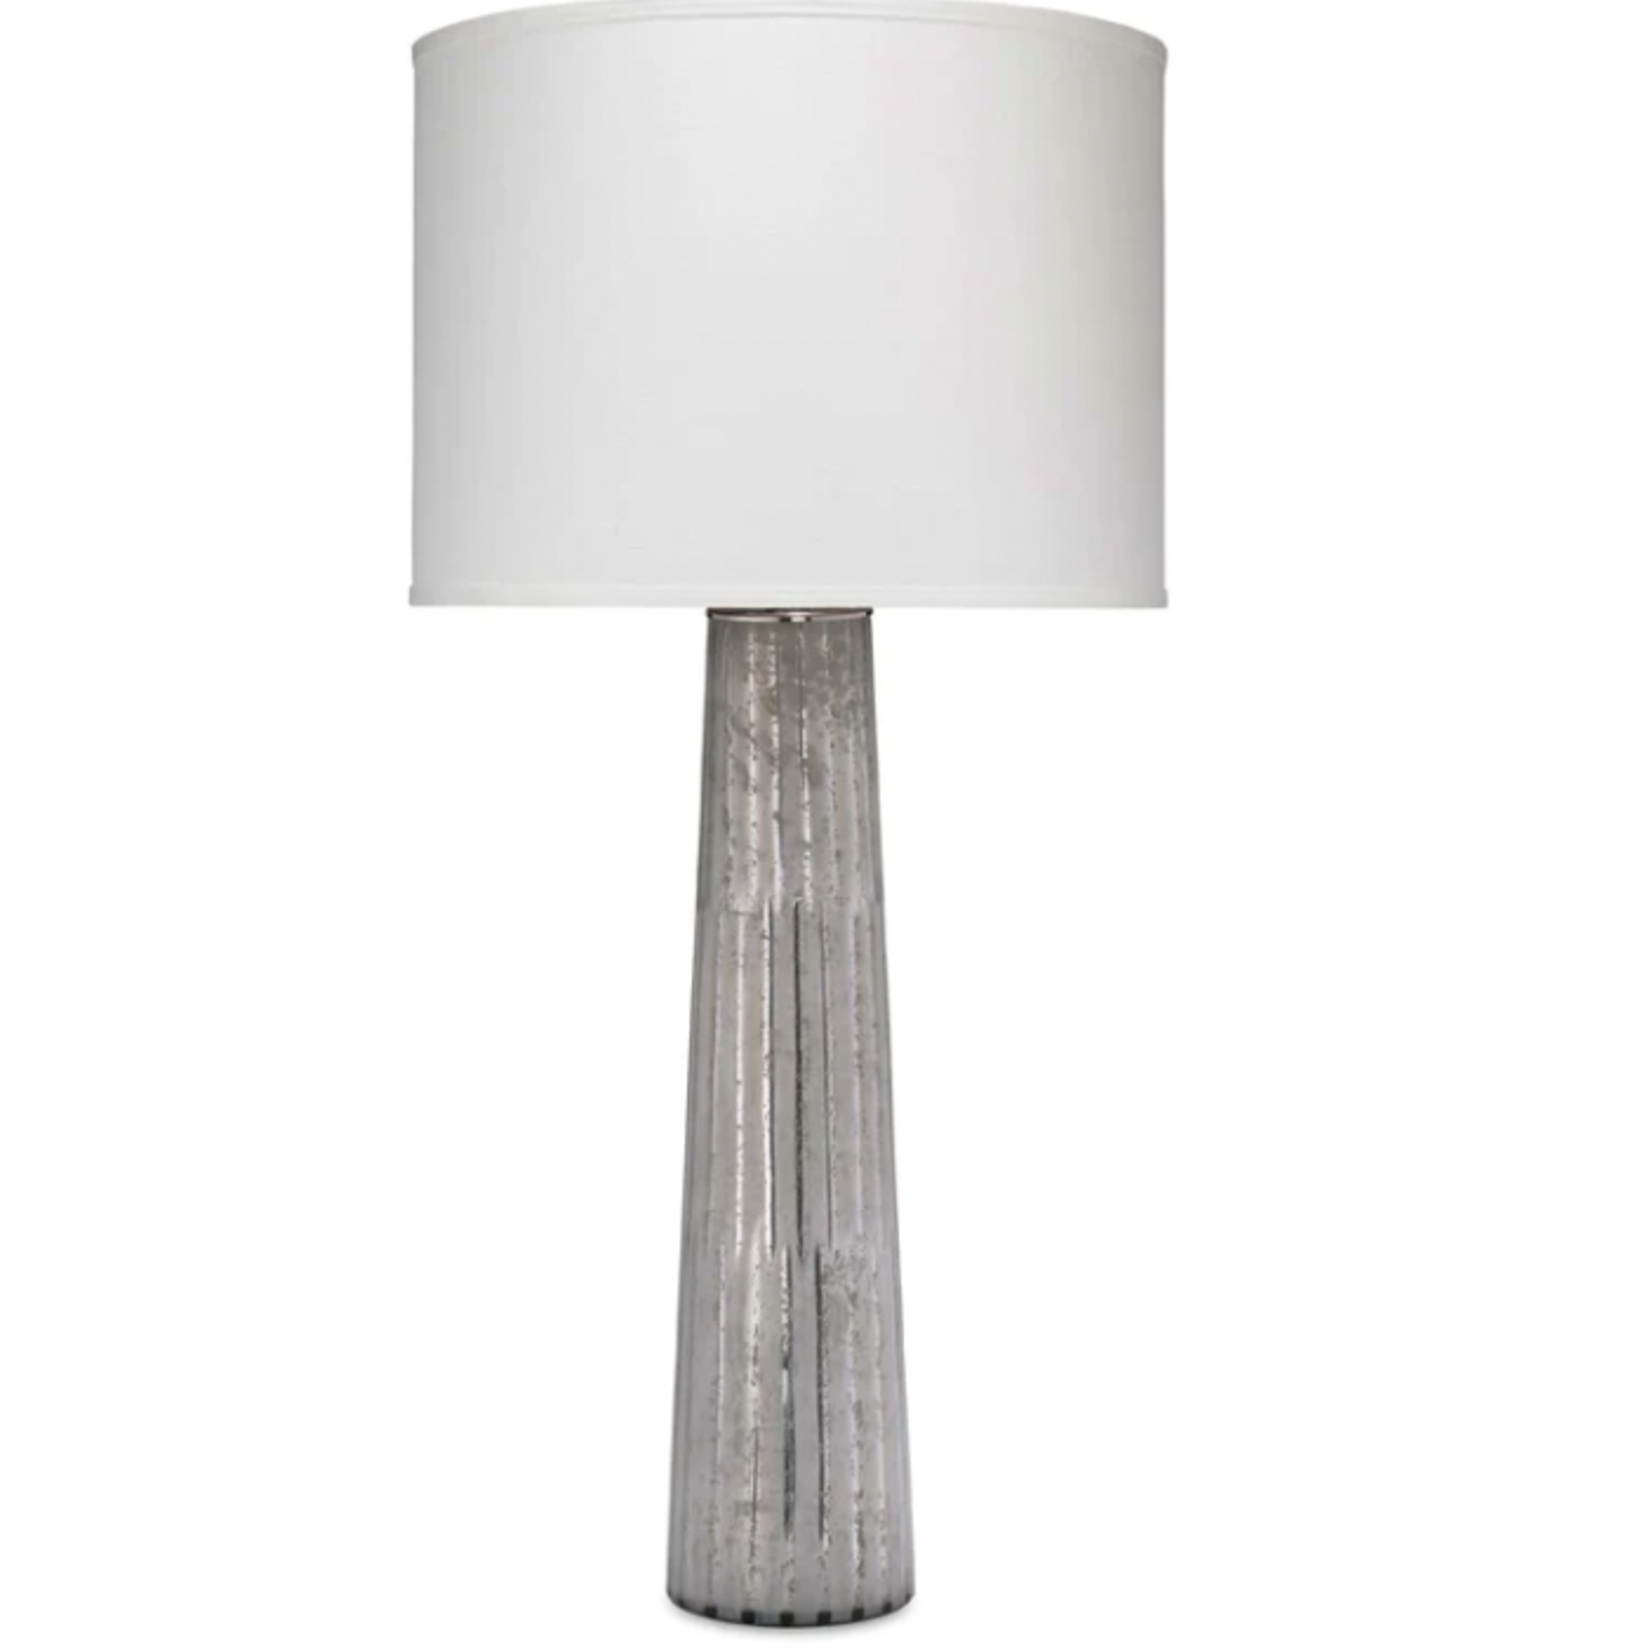 G3 Striped Silver Pillar Table Lamp